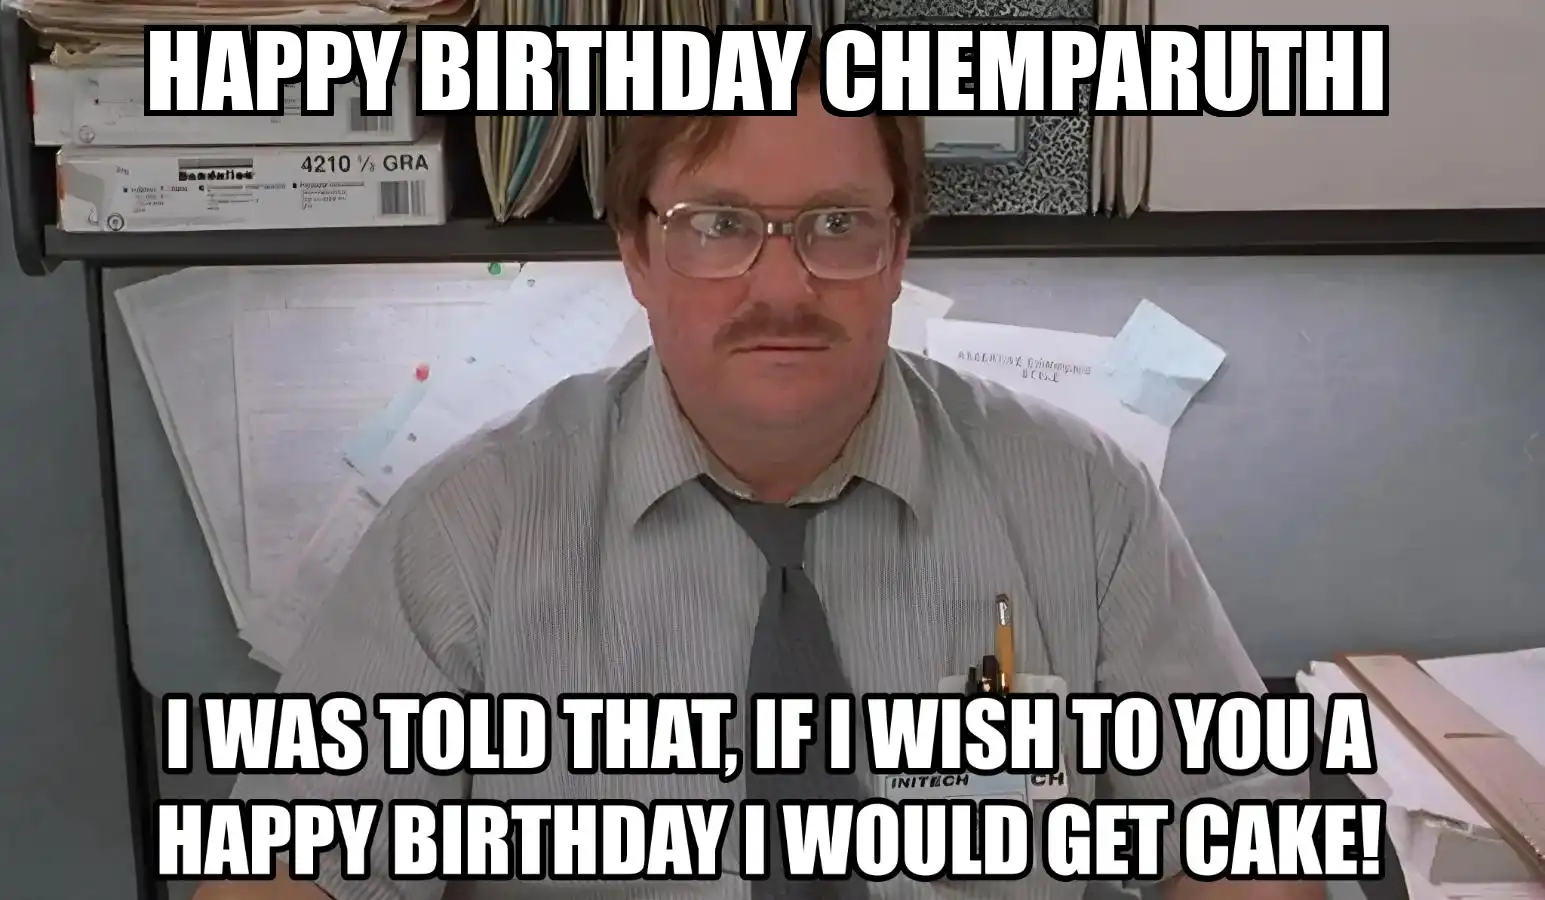 Happy Birthday Chemparuthi I Would Get A Cake Meme